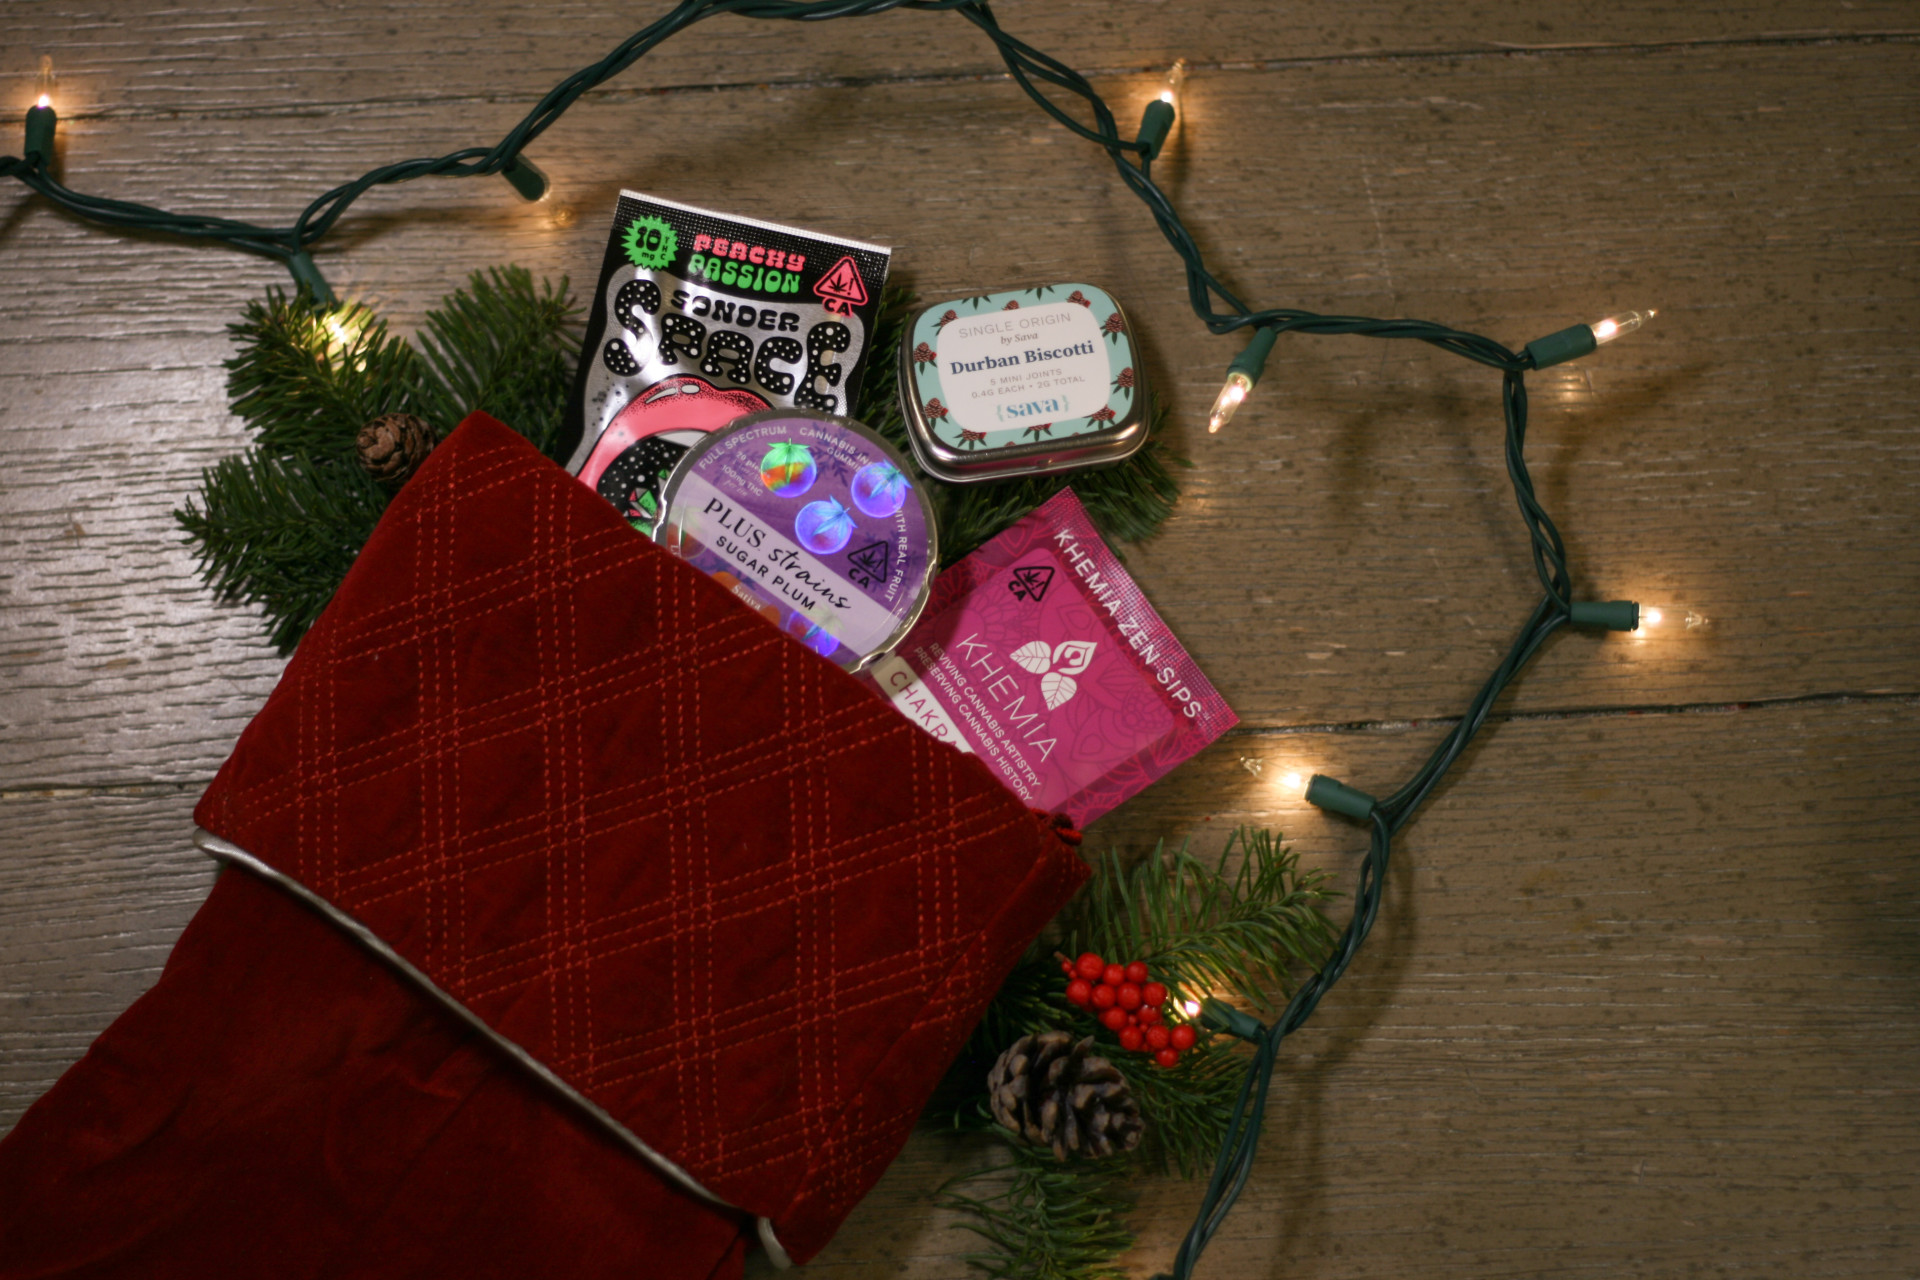 Stocking Stuffers Gift Guide